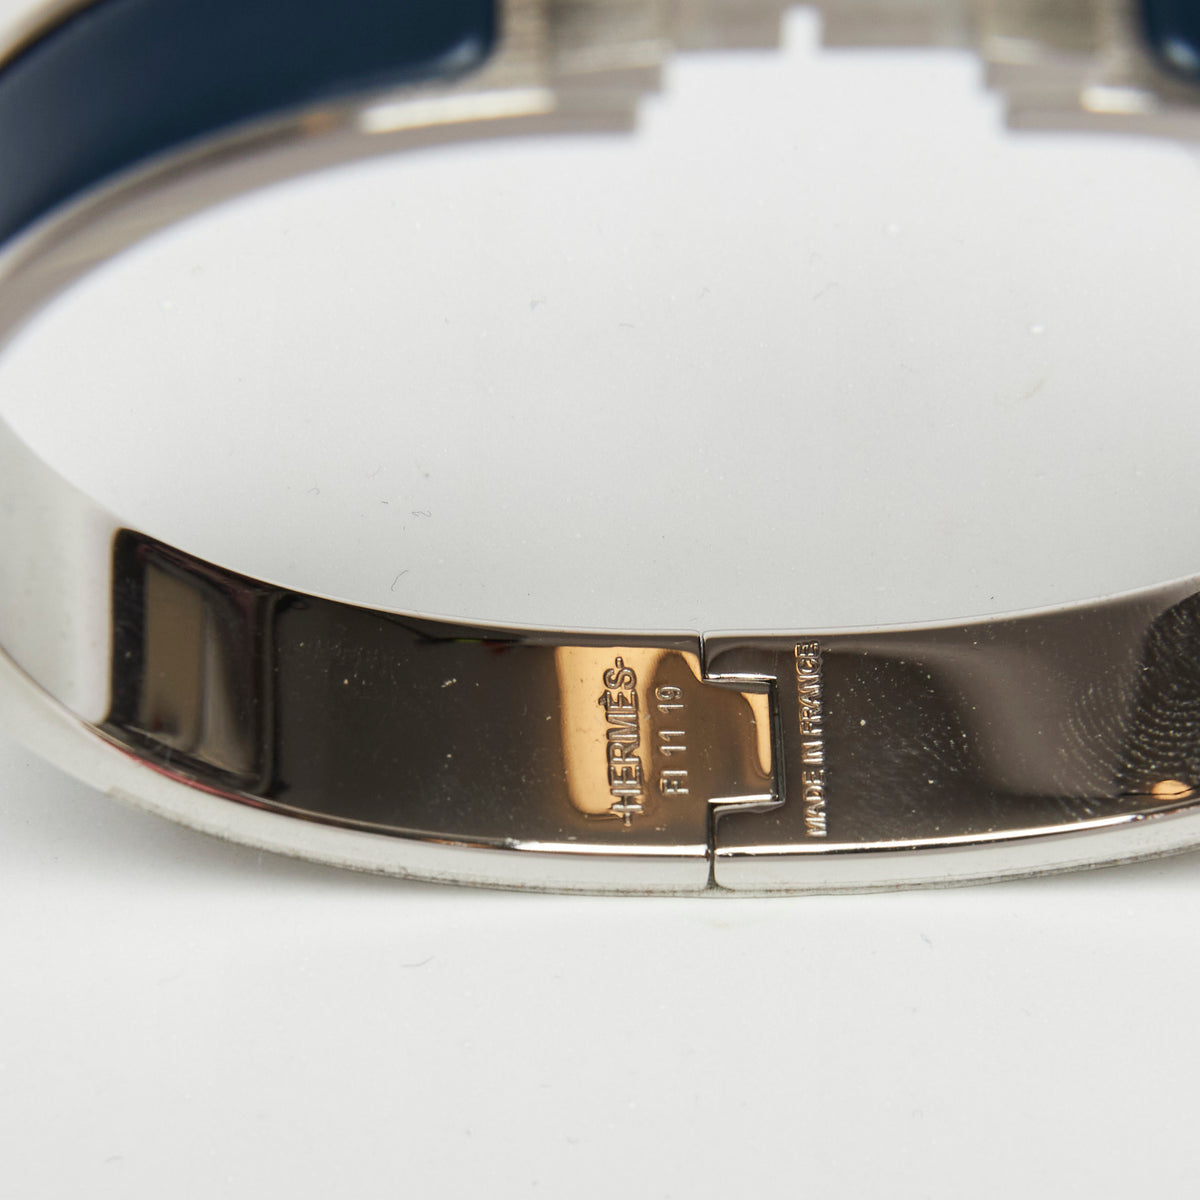 Excellent Pre-Loved Navy Enameled Bracelet with Silver Hardware. (close up)